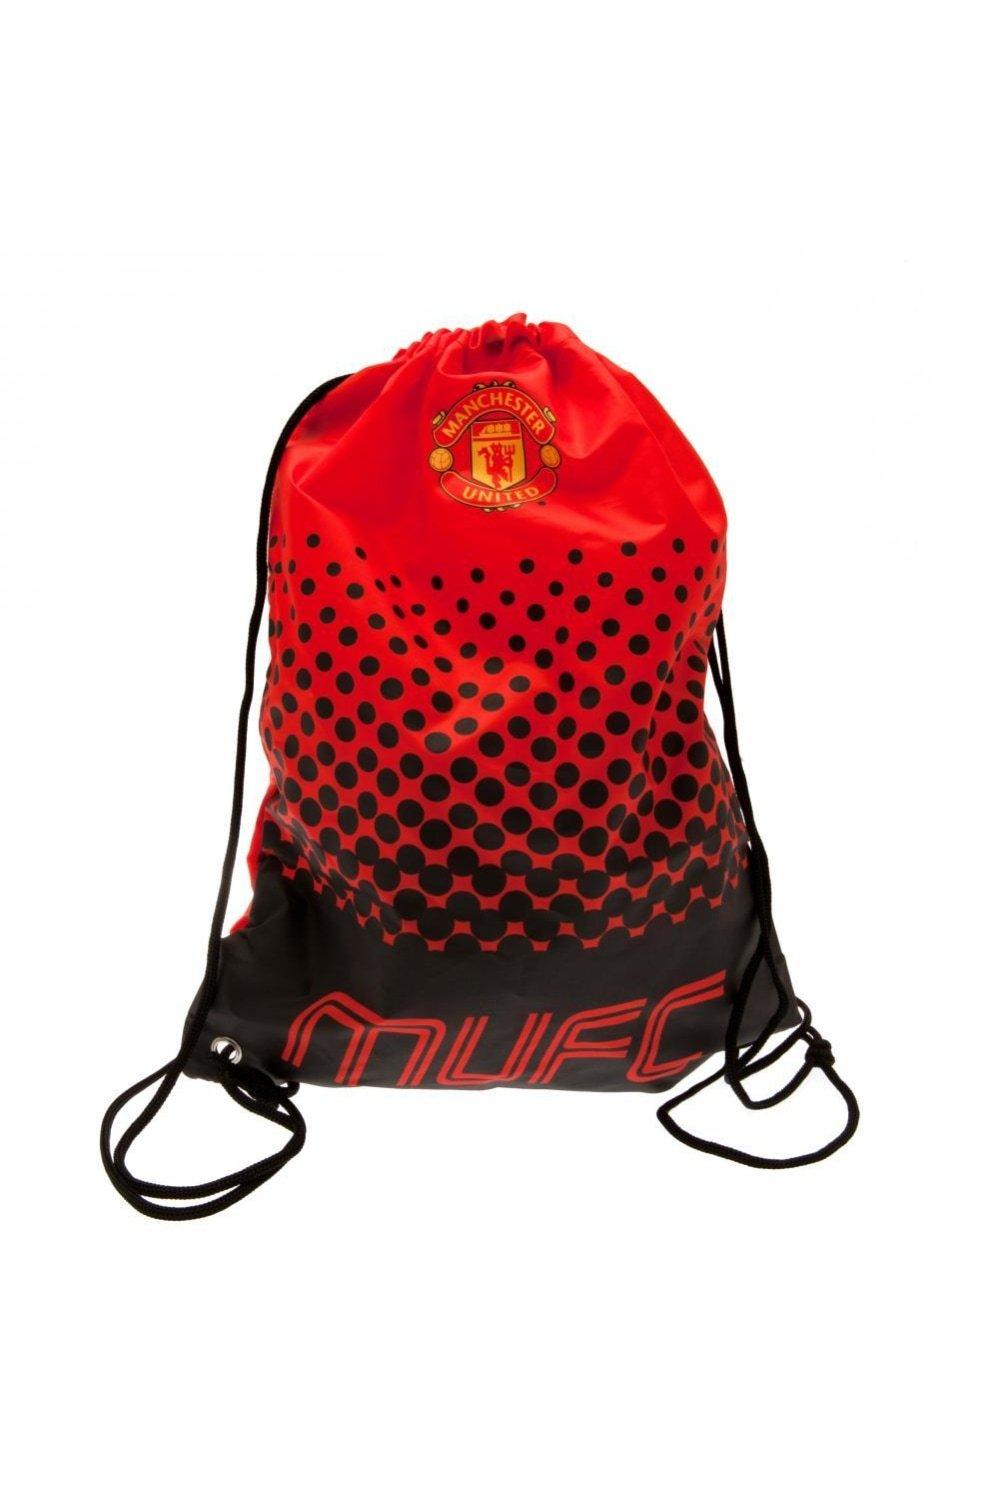 Сумка с гербом на шнурке Manchester United FC, красный